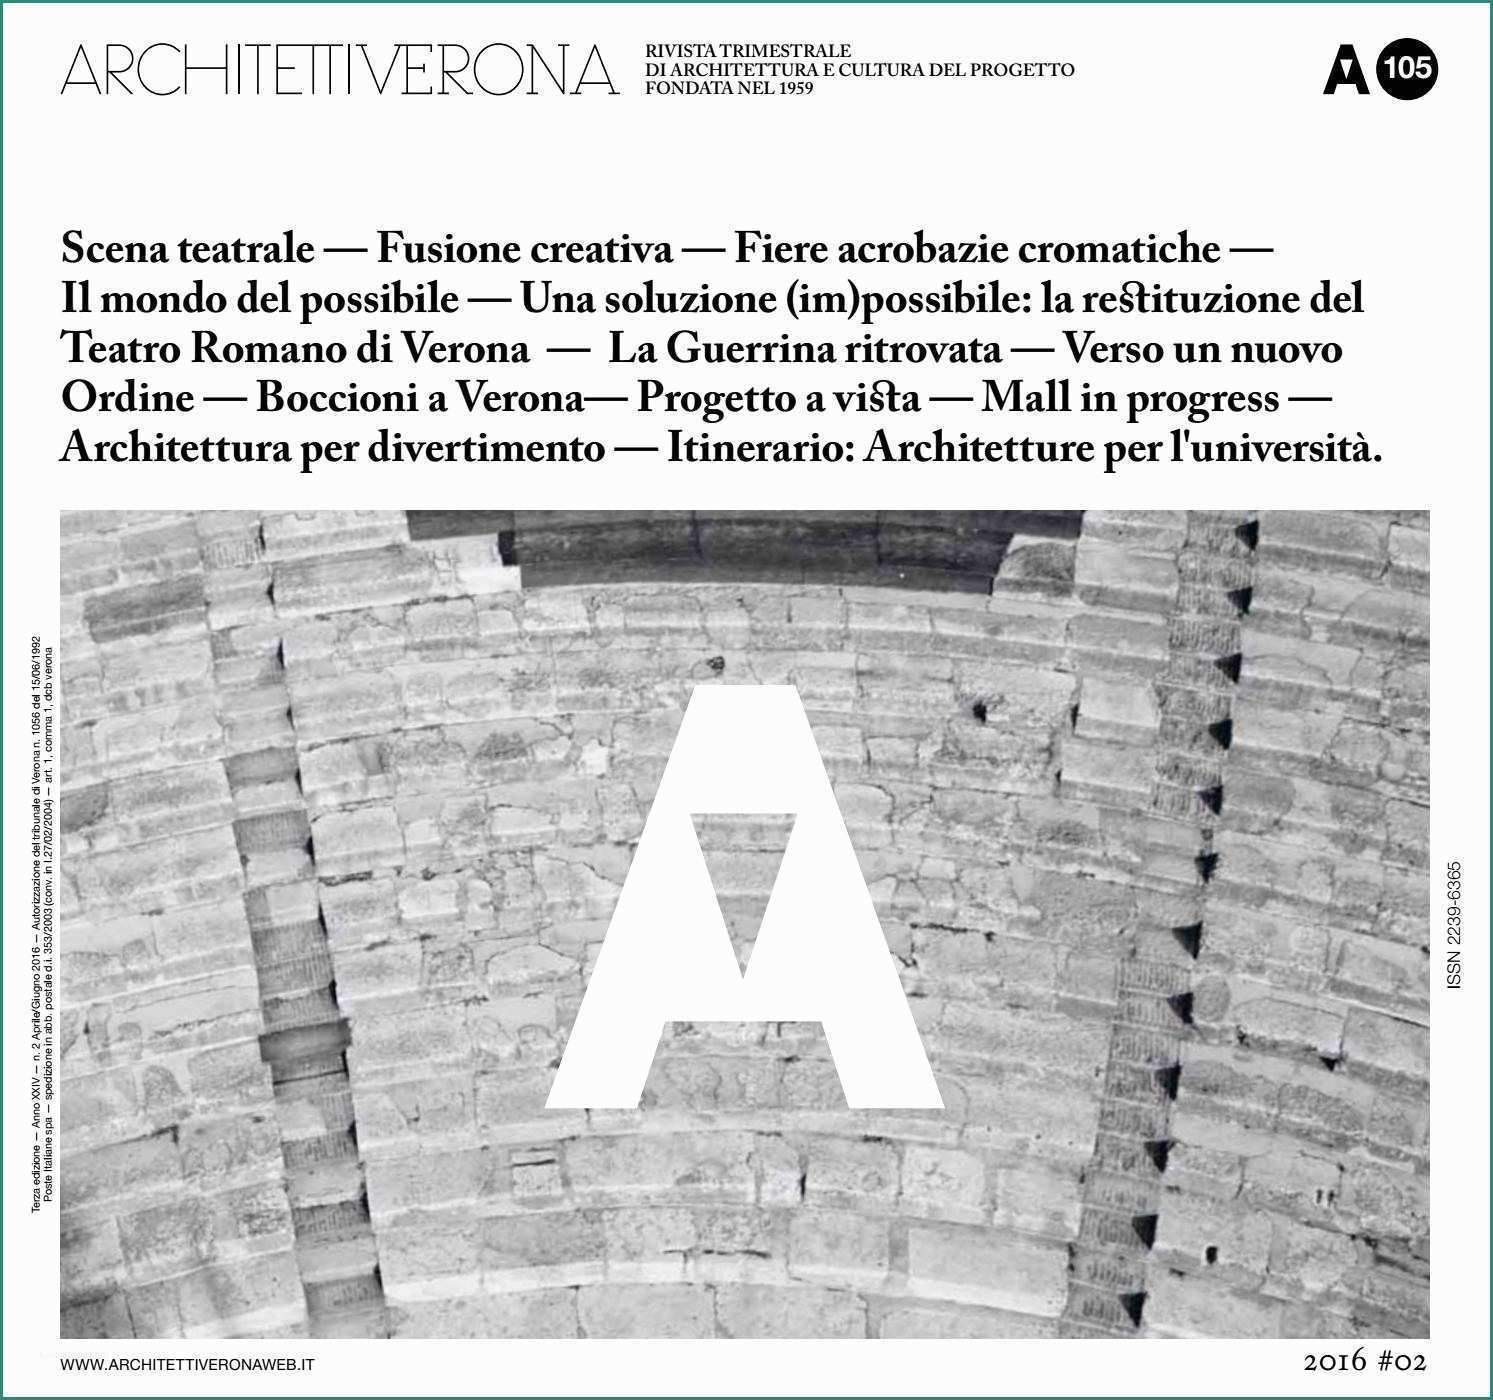 Pavimento Radiante Dwg E Architettiverona 105 by Architettiverona issuu